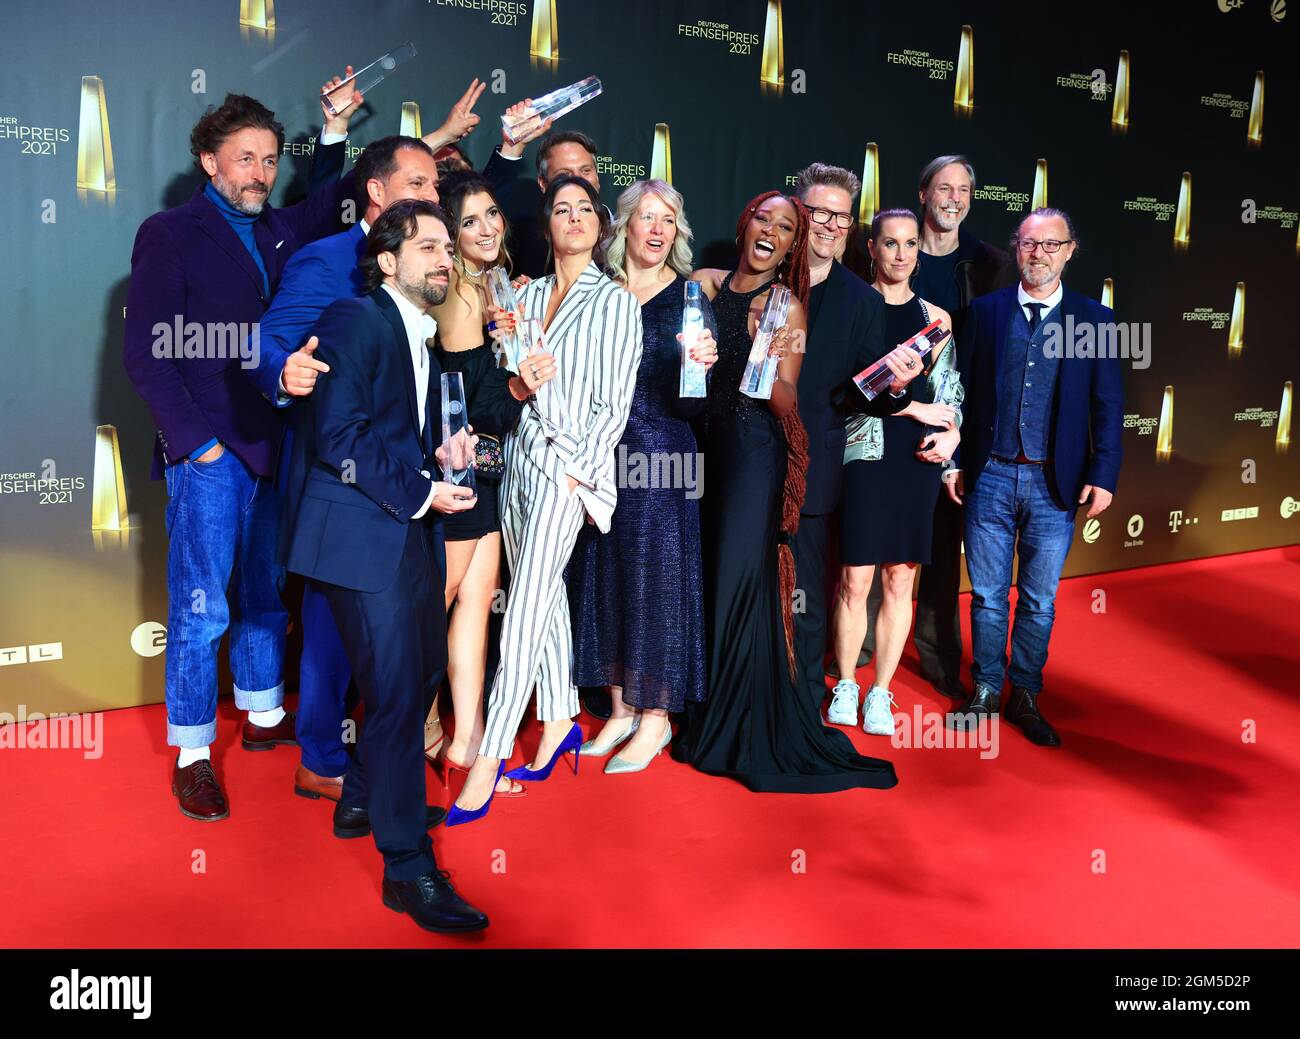 Cologne, Germany. 16th Sep, 2021. Quirin Berg, Anke Greifeneder, Hanno  Hackfort, Luisa Hardenberg, Soma Pysall, Roxana Samadi and Jobel Mokonzi  are the winners in the category "Best Drama Series" for "Para -